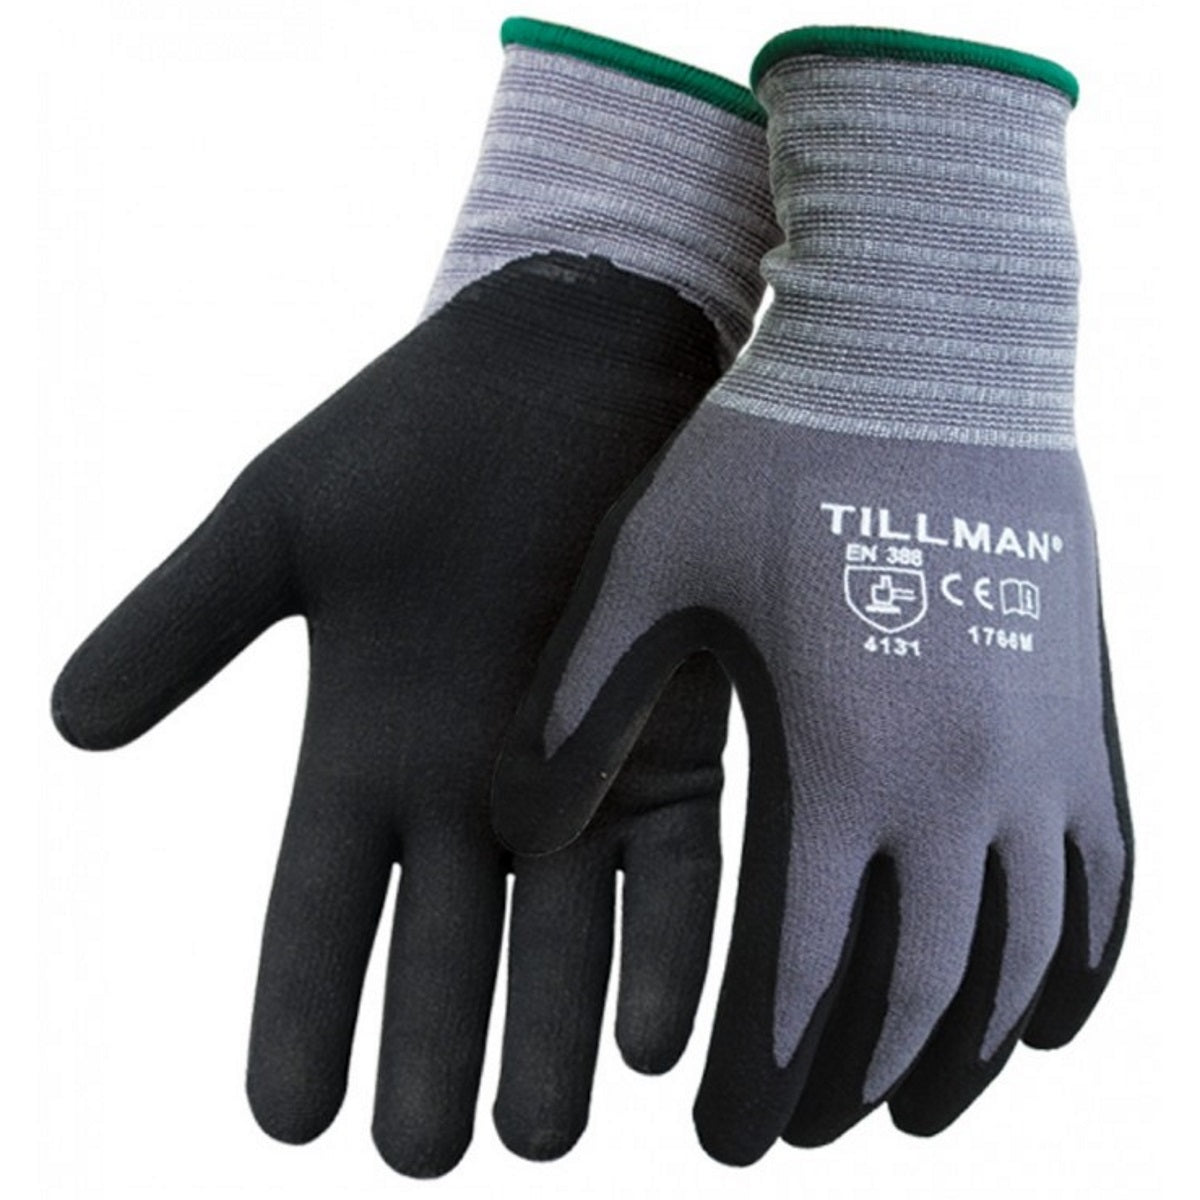 Tillman 1766 Abrasion Resistant Gloves - Bulk Pack (1766)